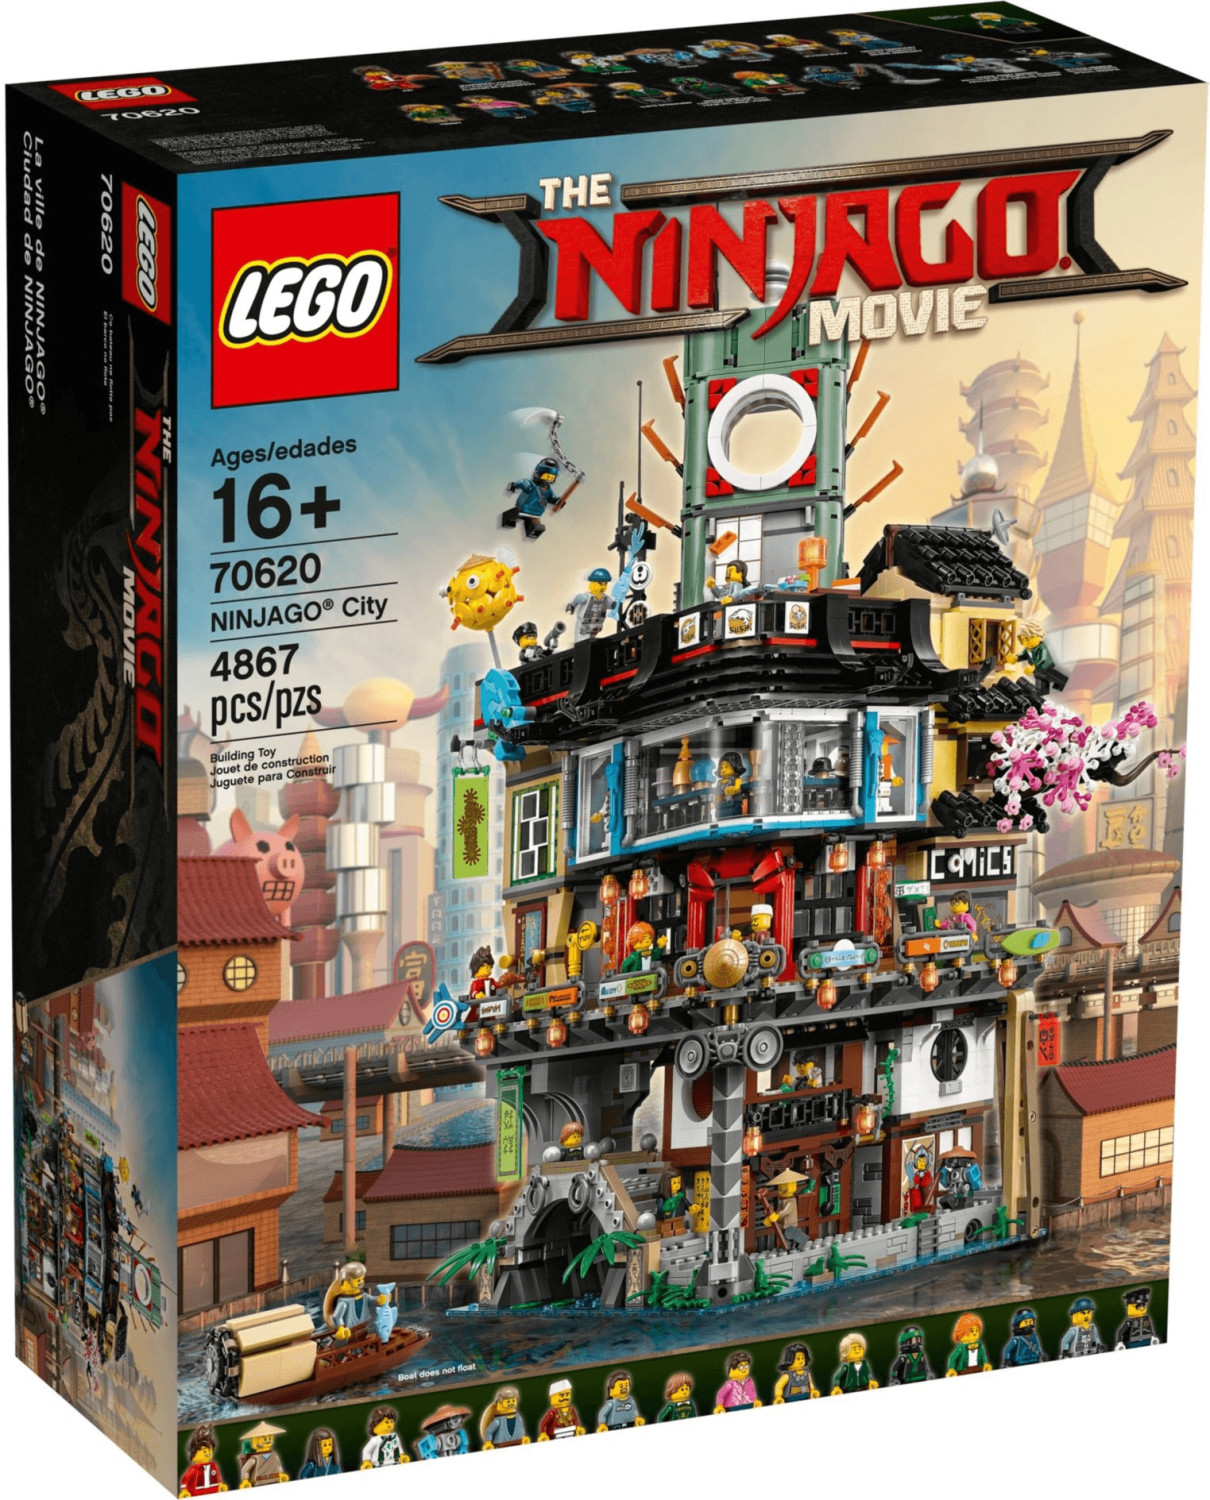 Immagine relativa a LEGO Ninjago - City 70620